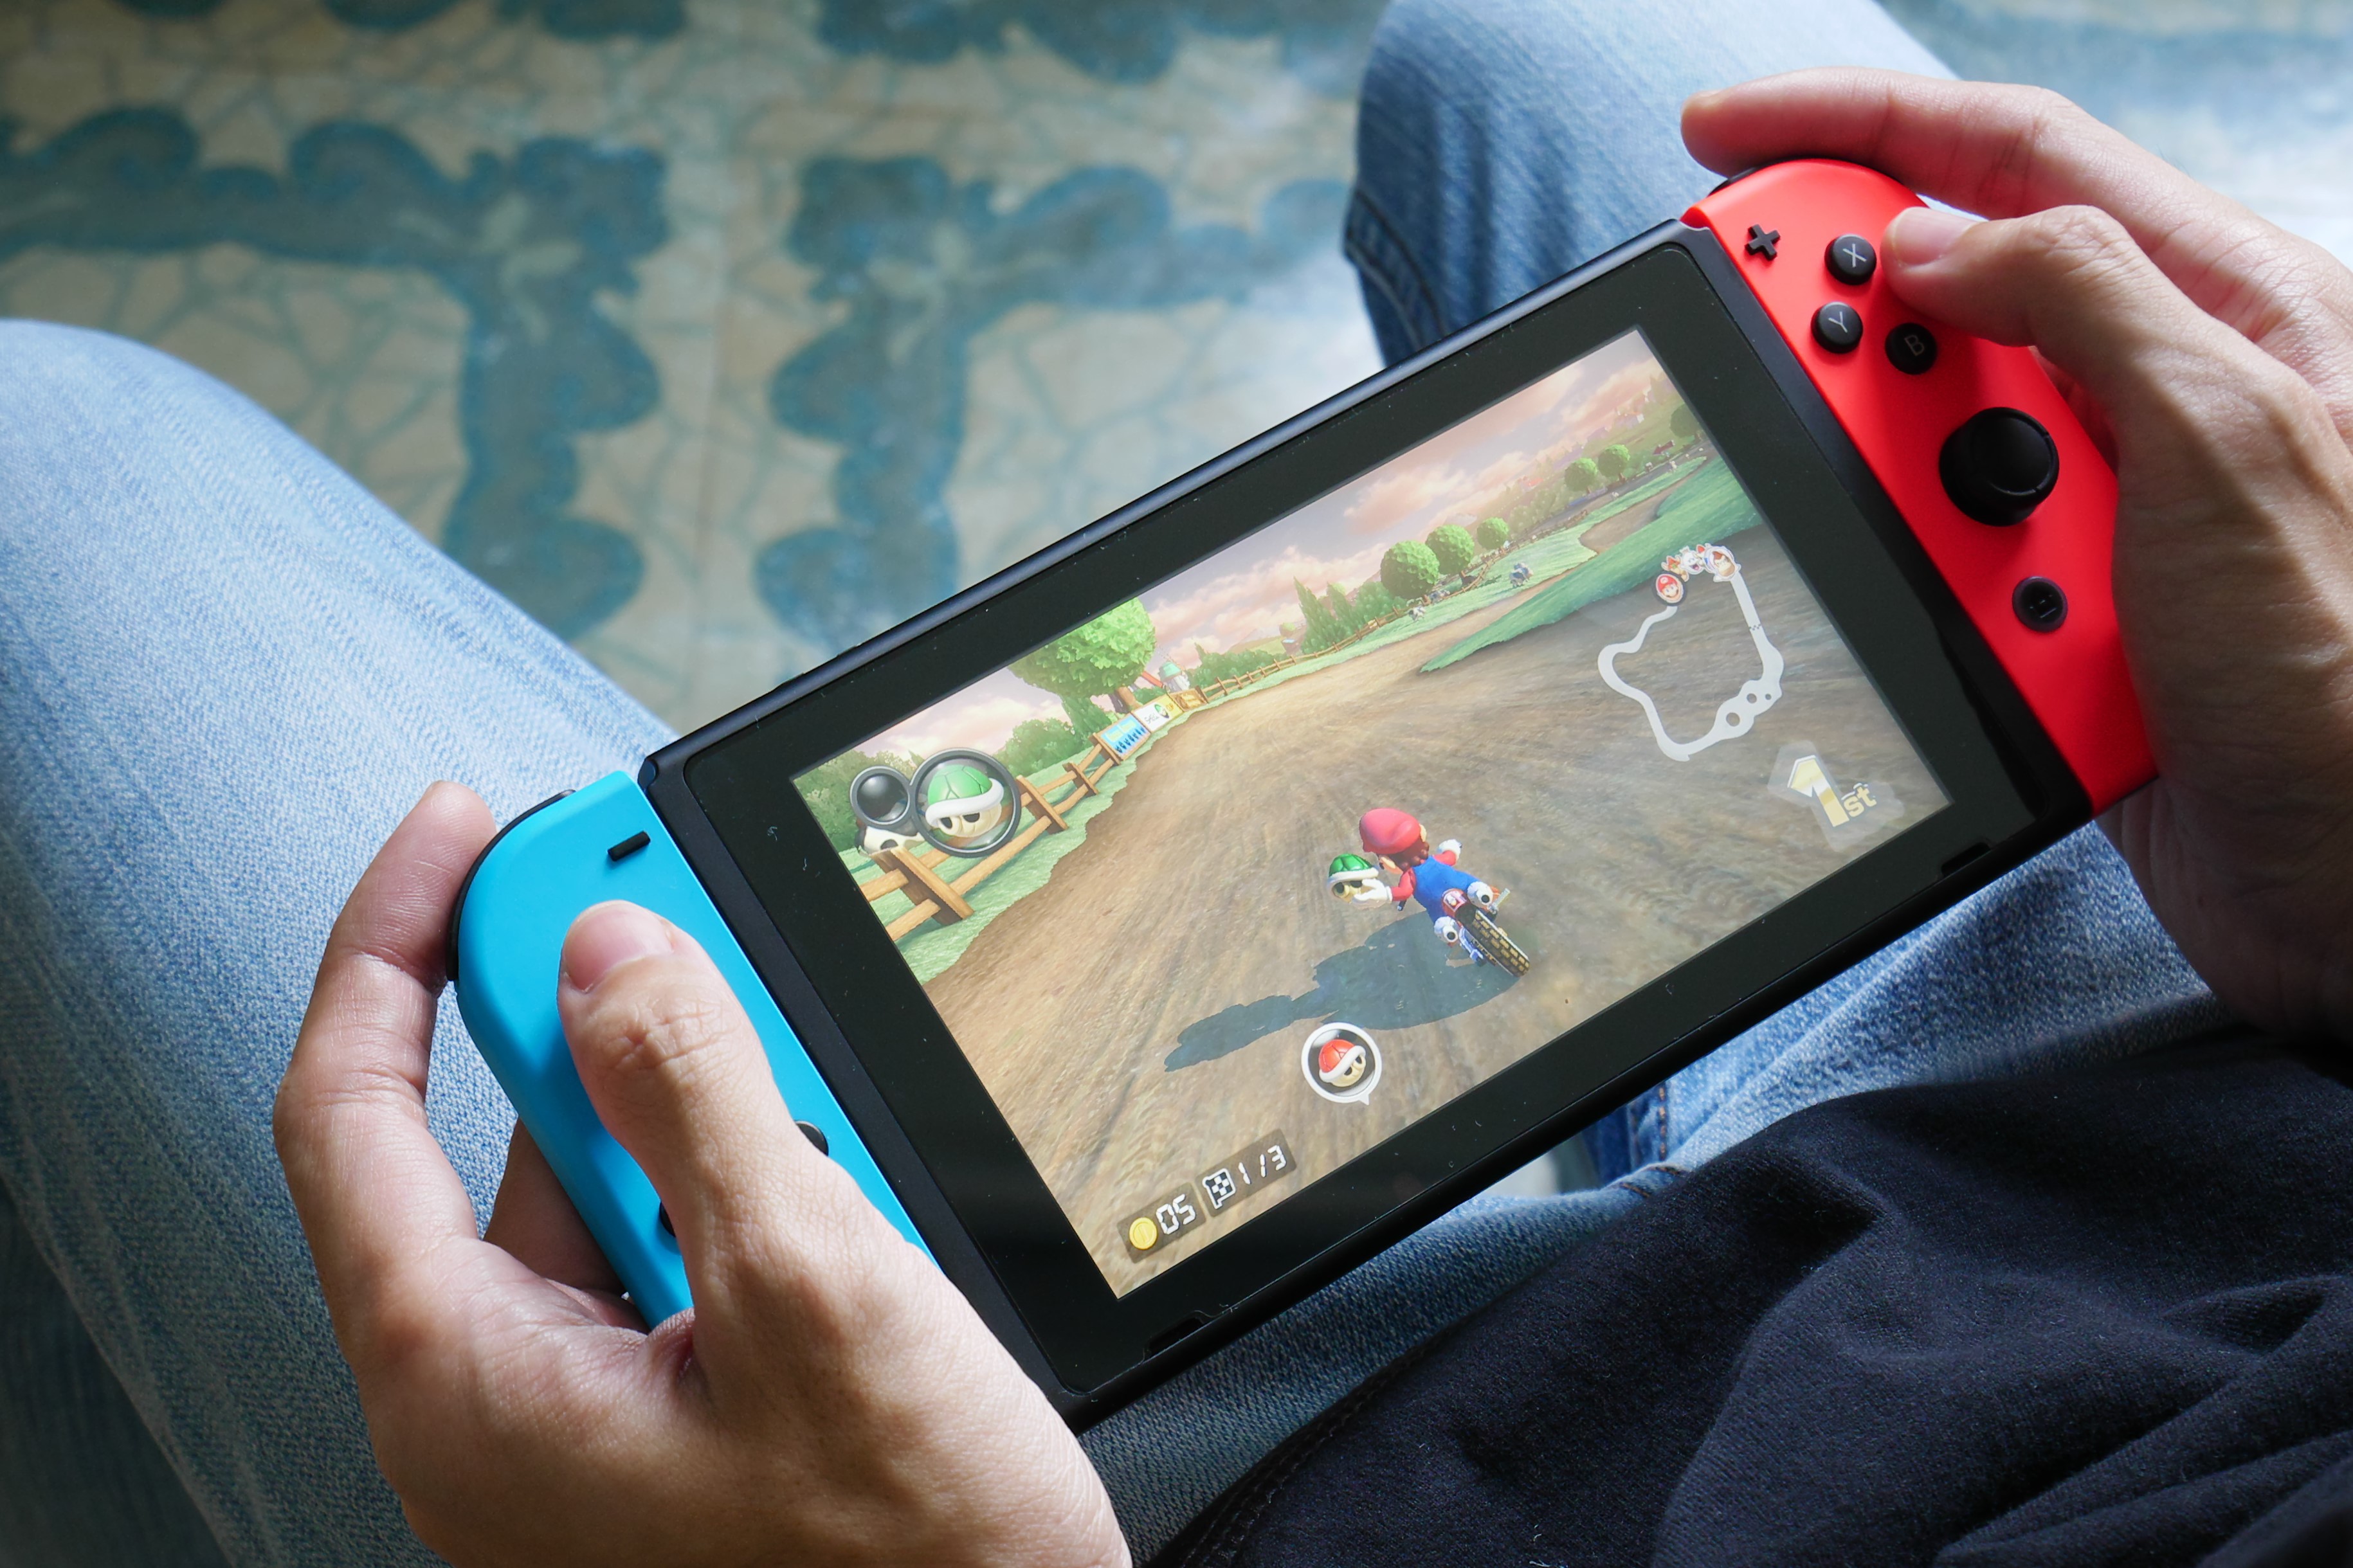 Black Friday Nintendo Switch Accessories: Best Deals Still Live on